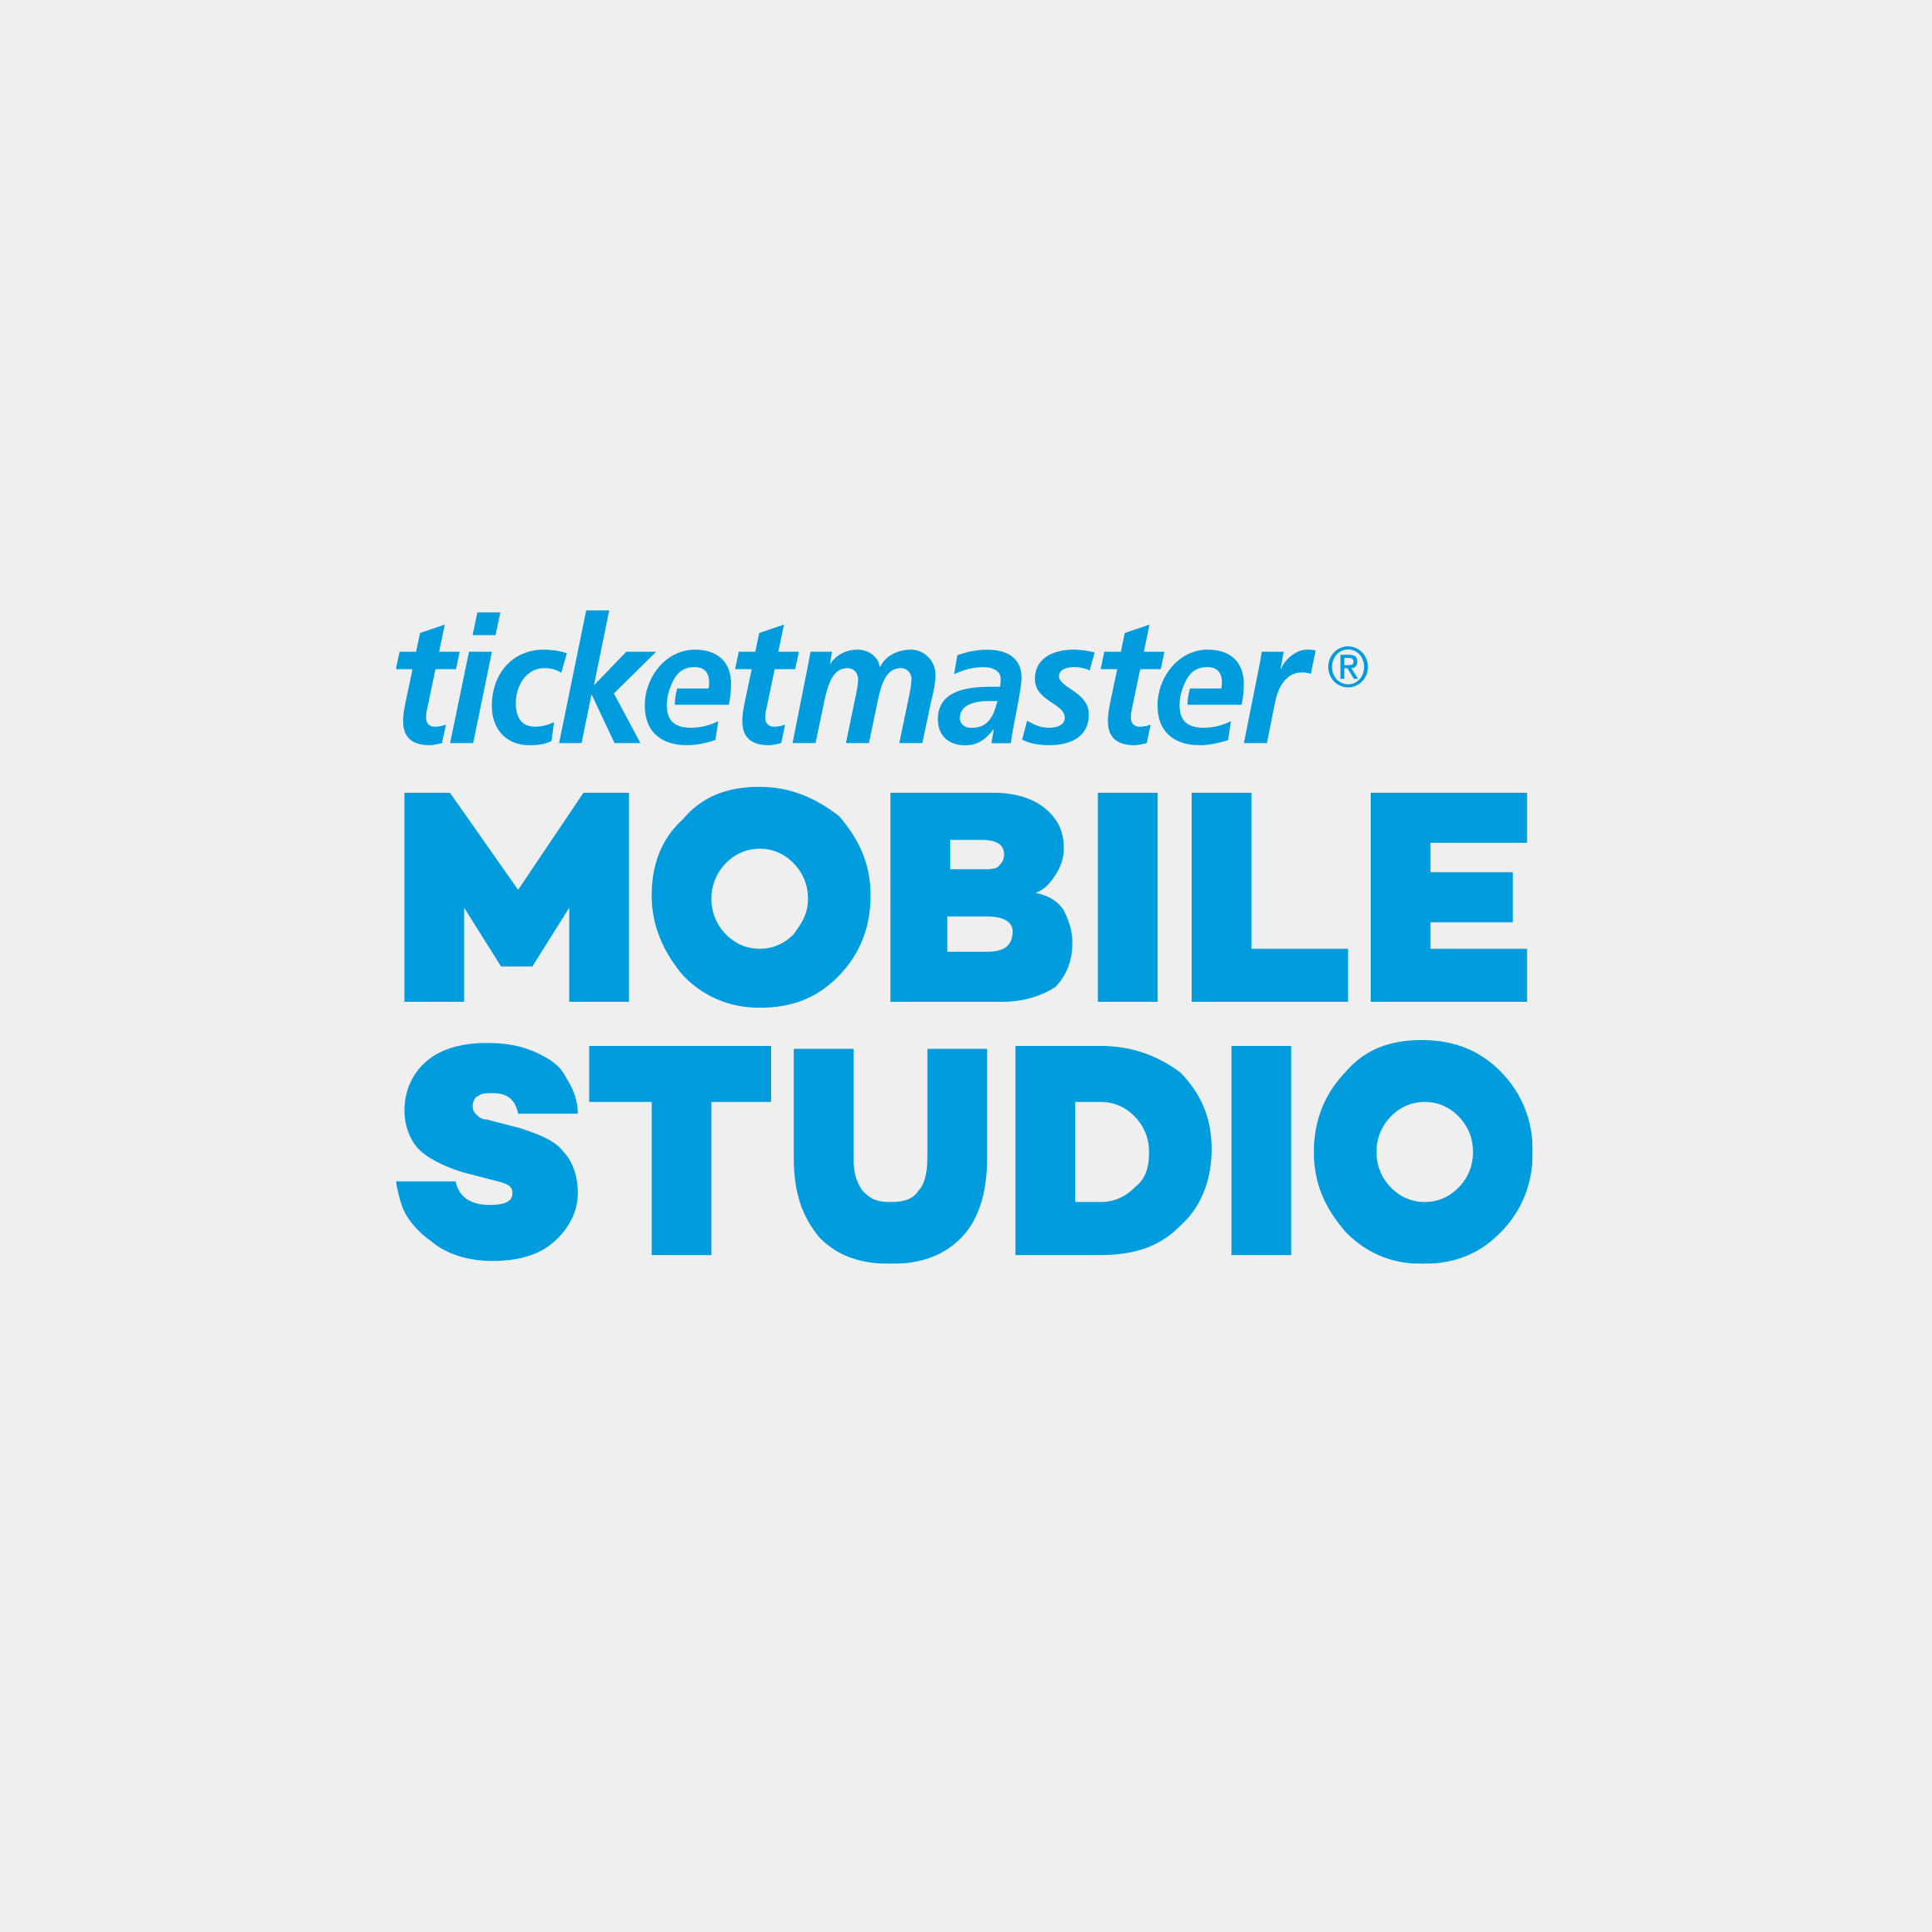 ticketmaster mobile studio logo